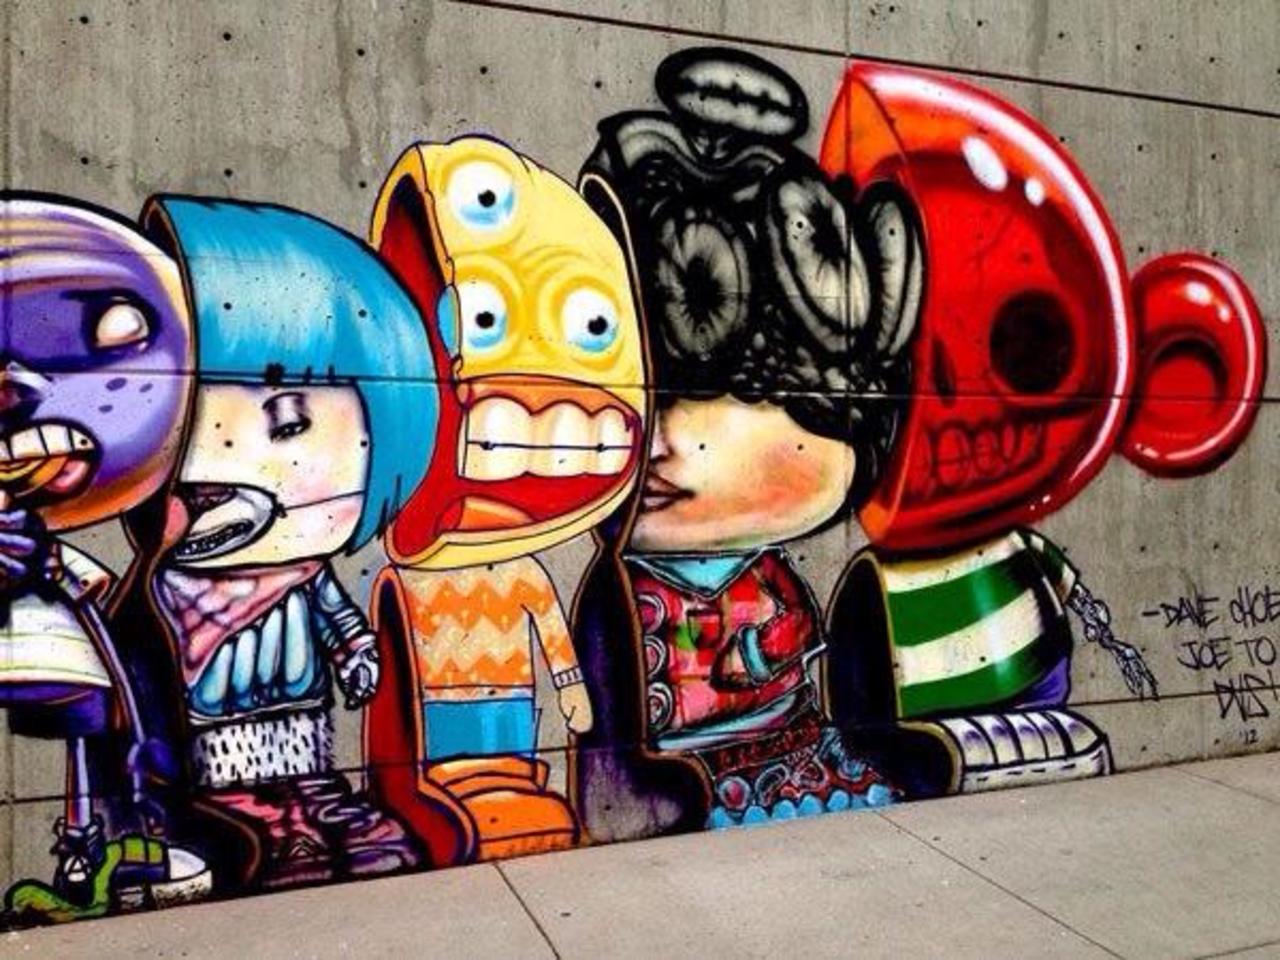 David Choe, DVS-1, and Joseph To #graffiti #streetart #mtncolors #art http://t.co/0rdFZp10Y2